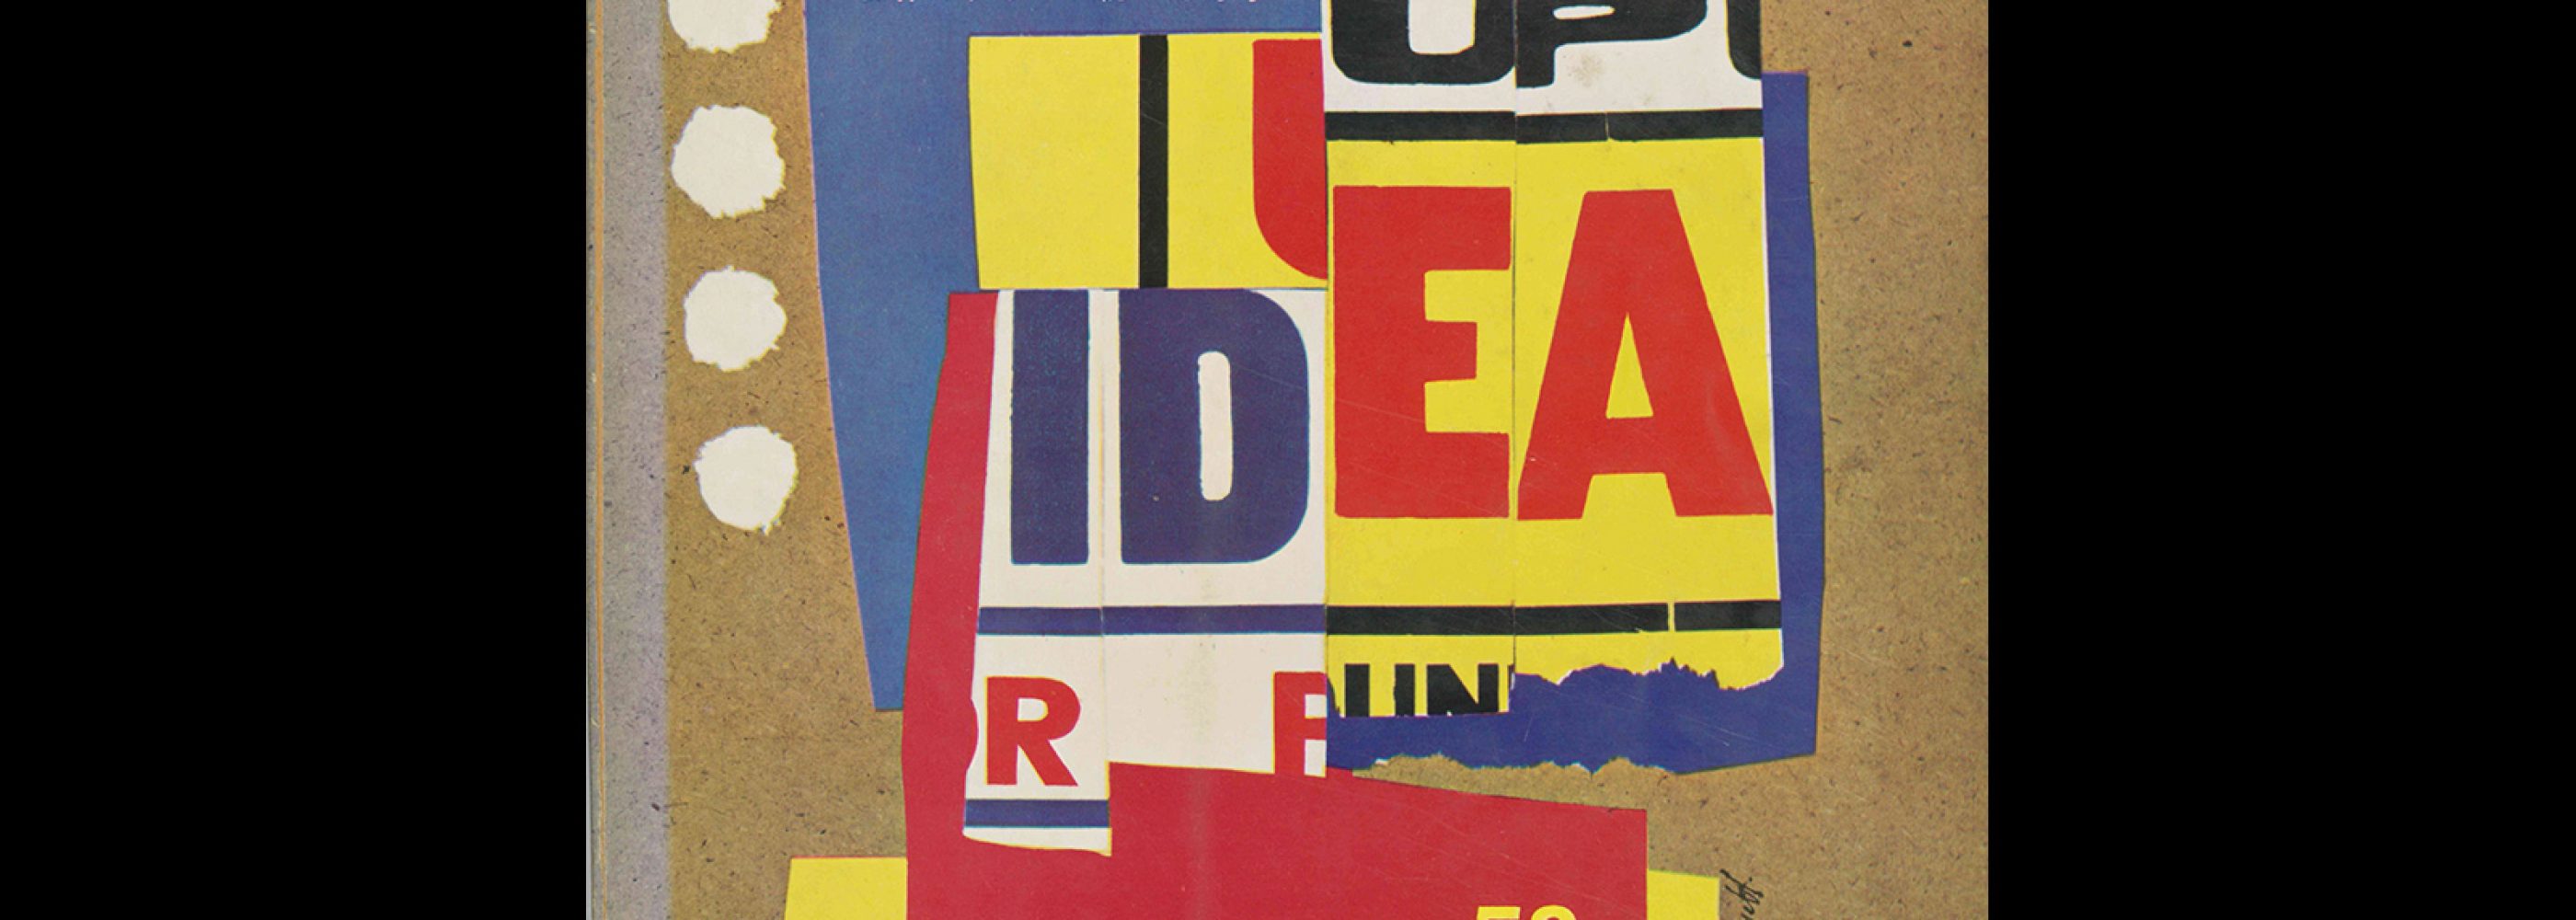 Idea 53, 1962. Cover design by Ivan Chermayeff.